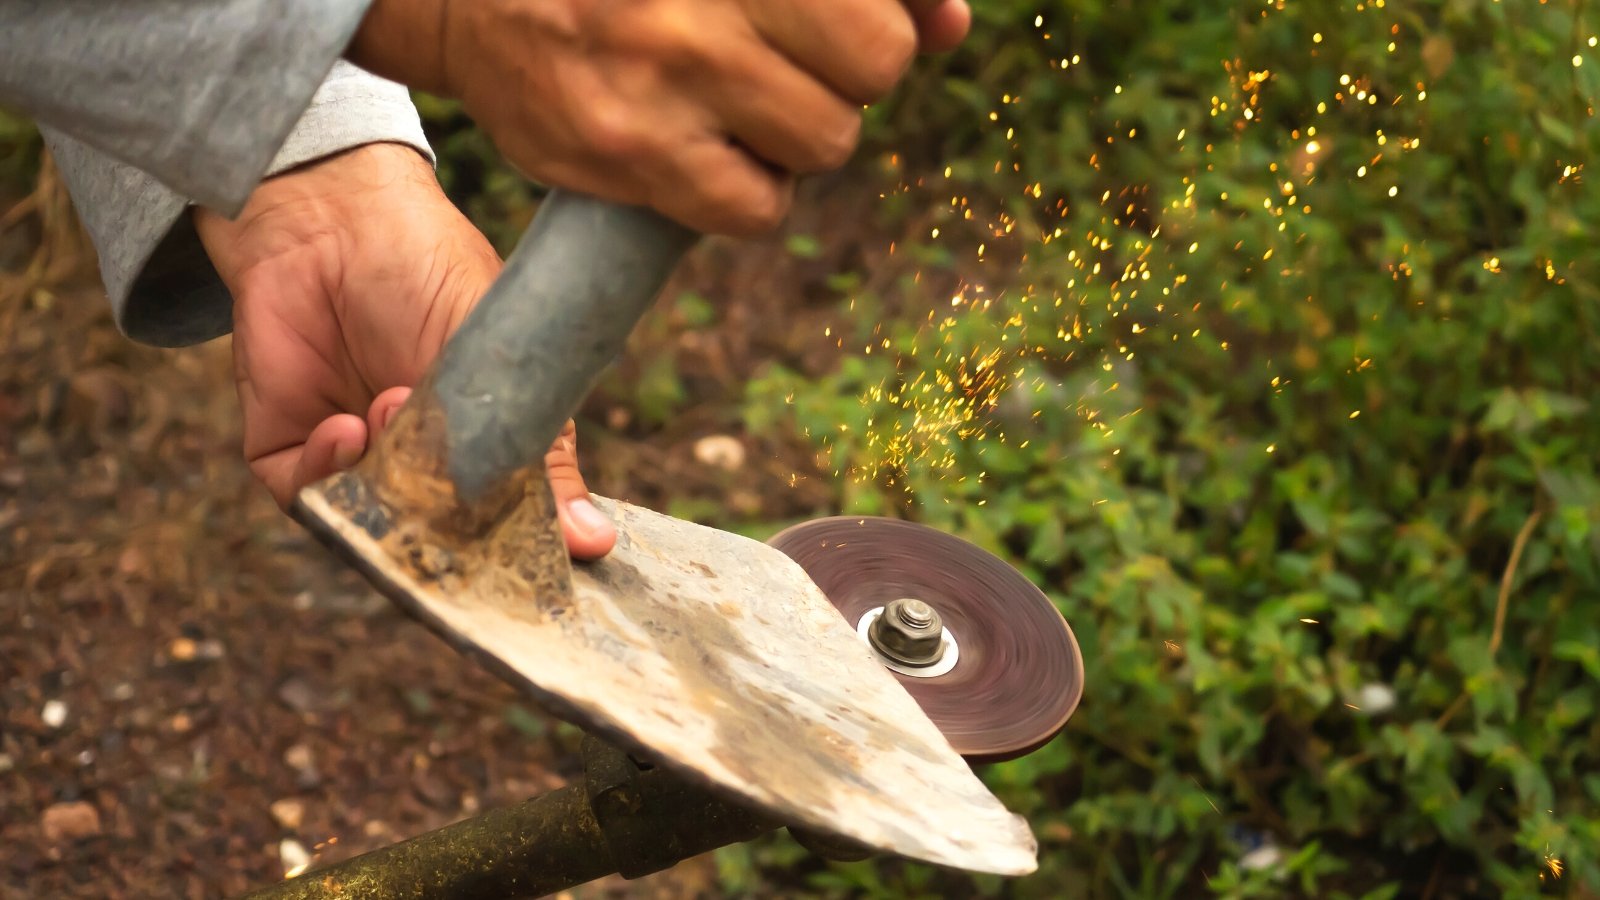 how to sharpen garden tools